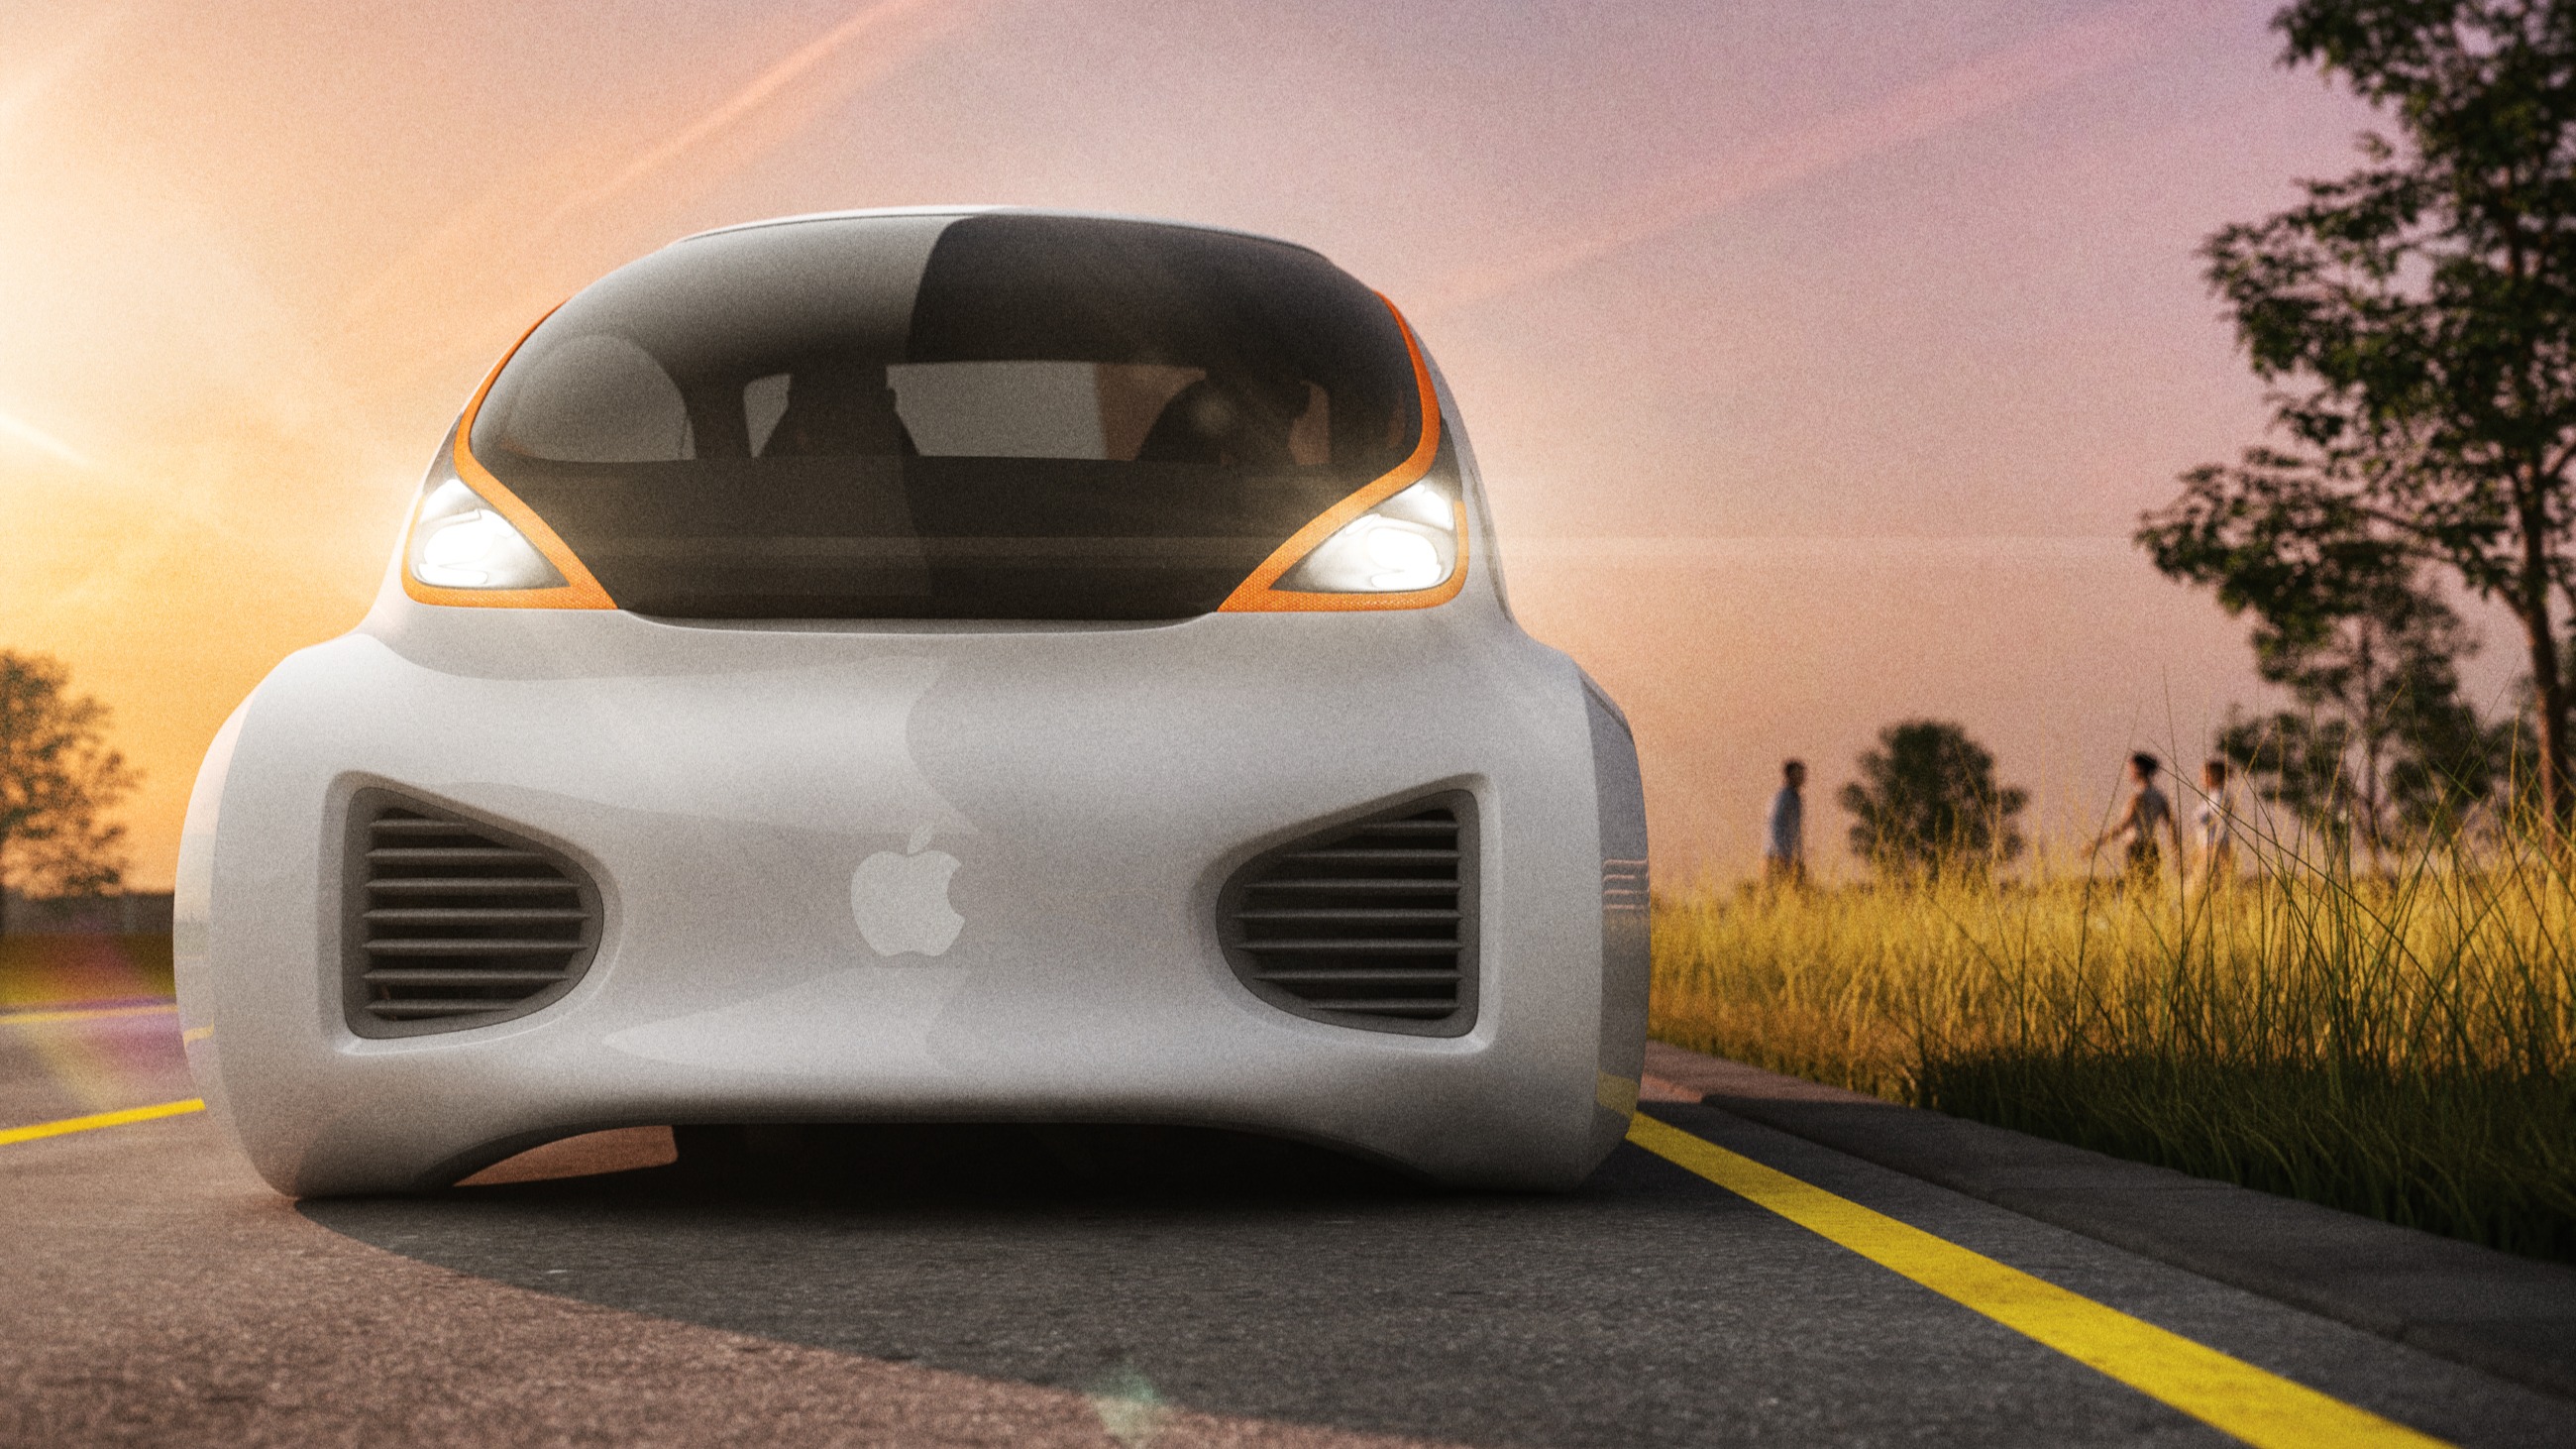 Apple Car concept image